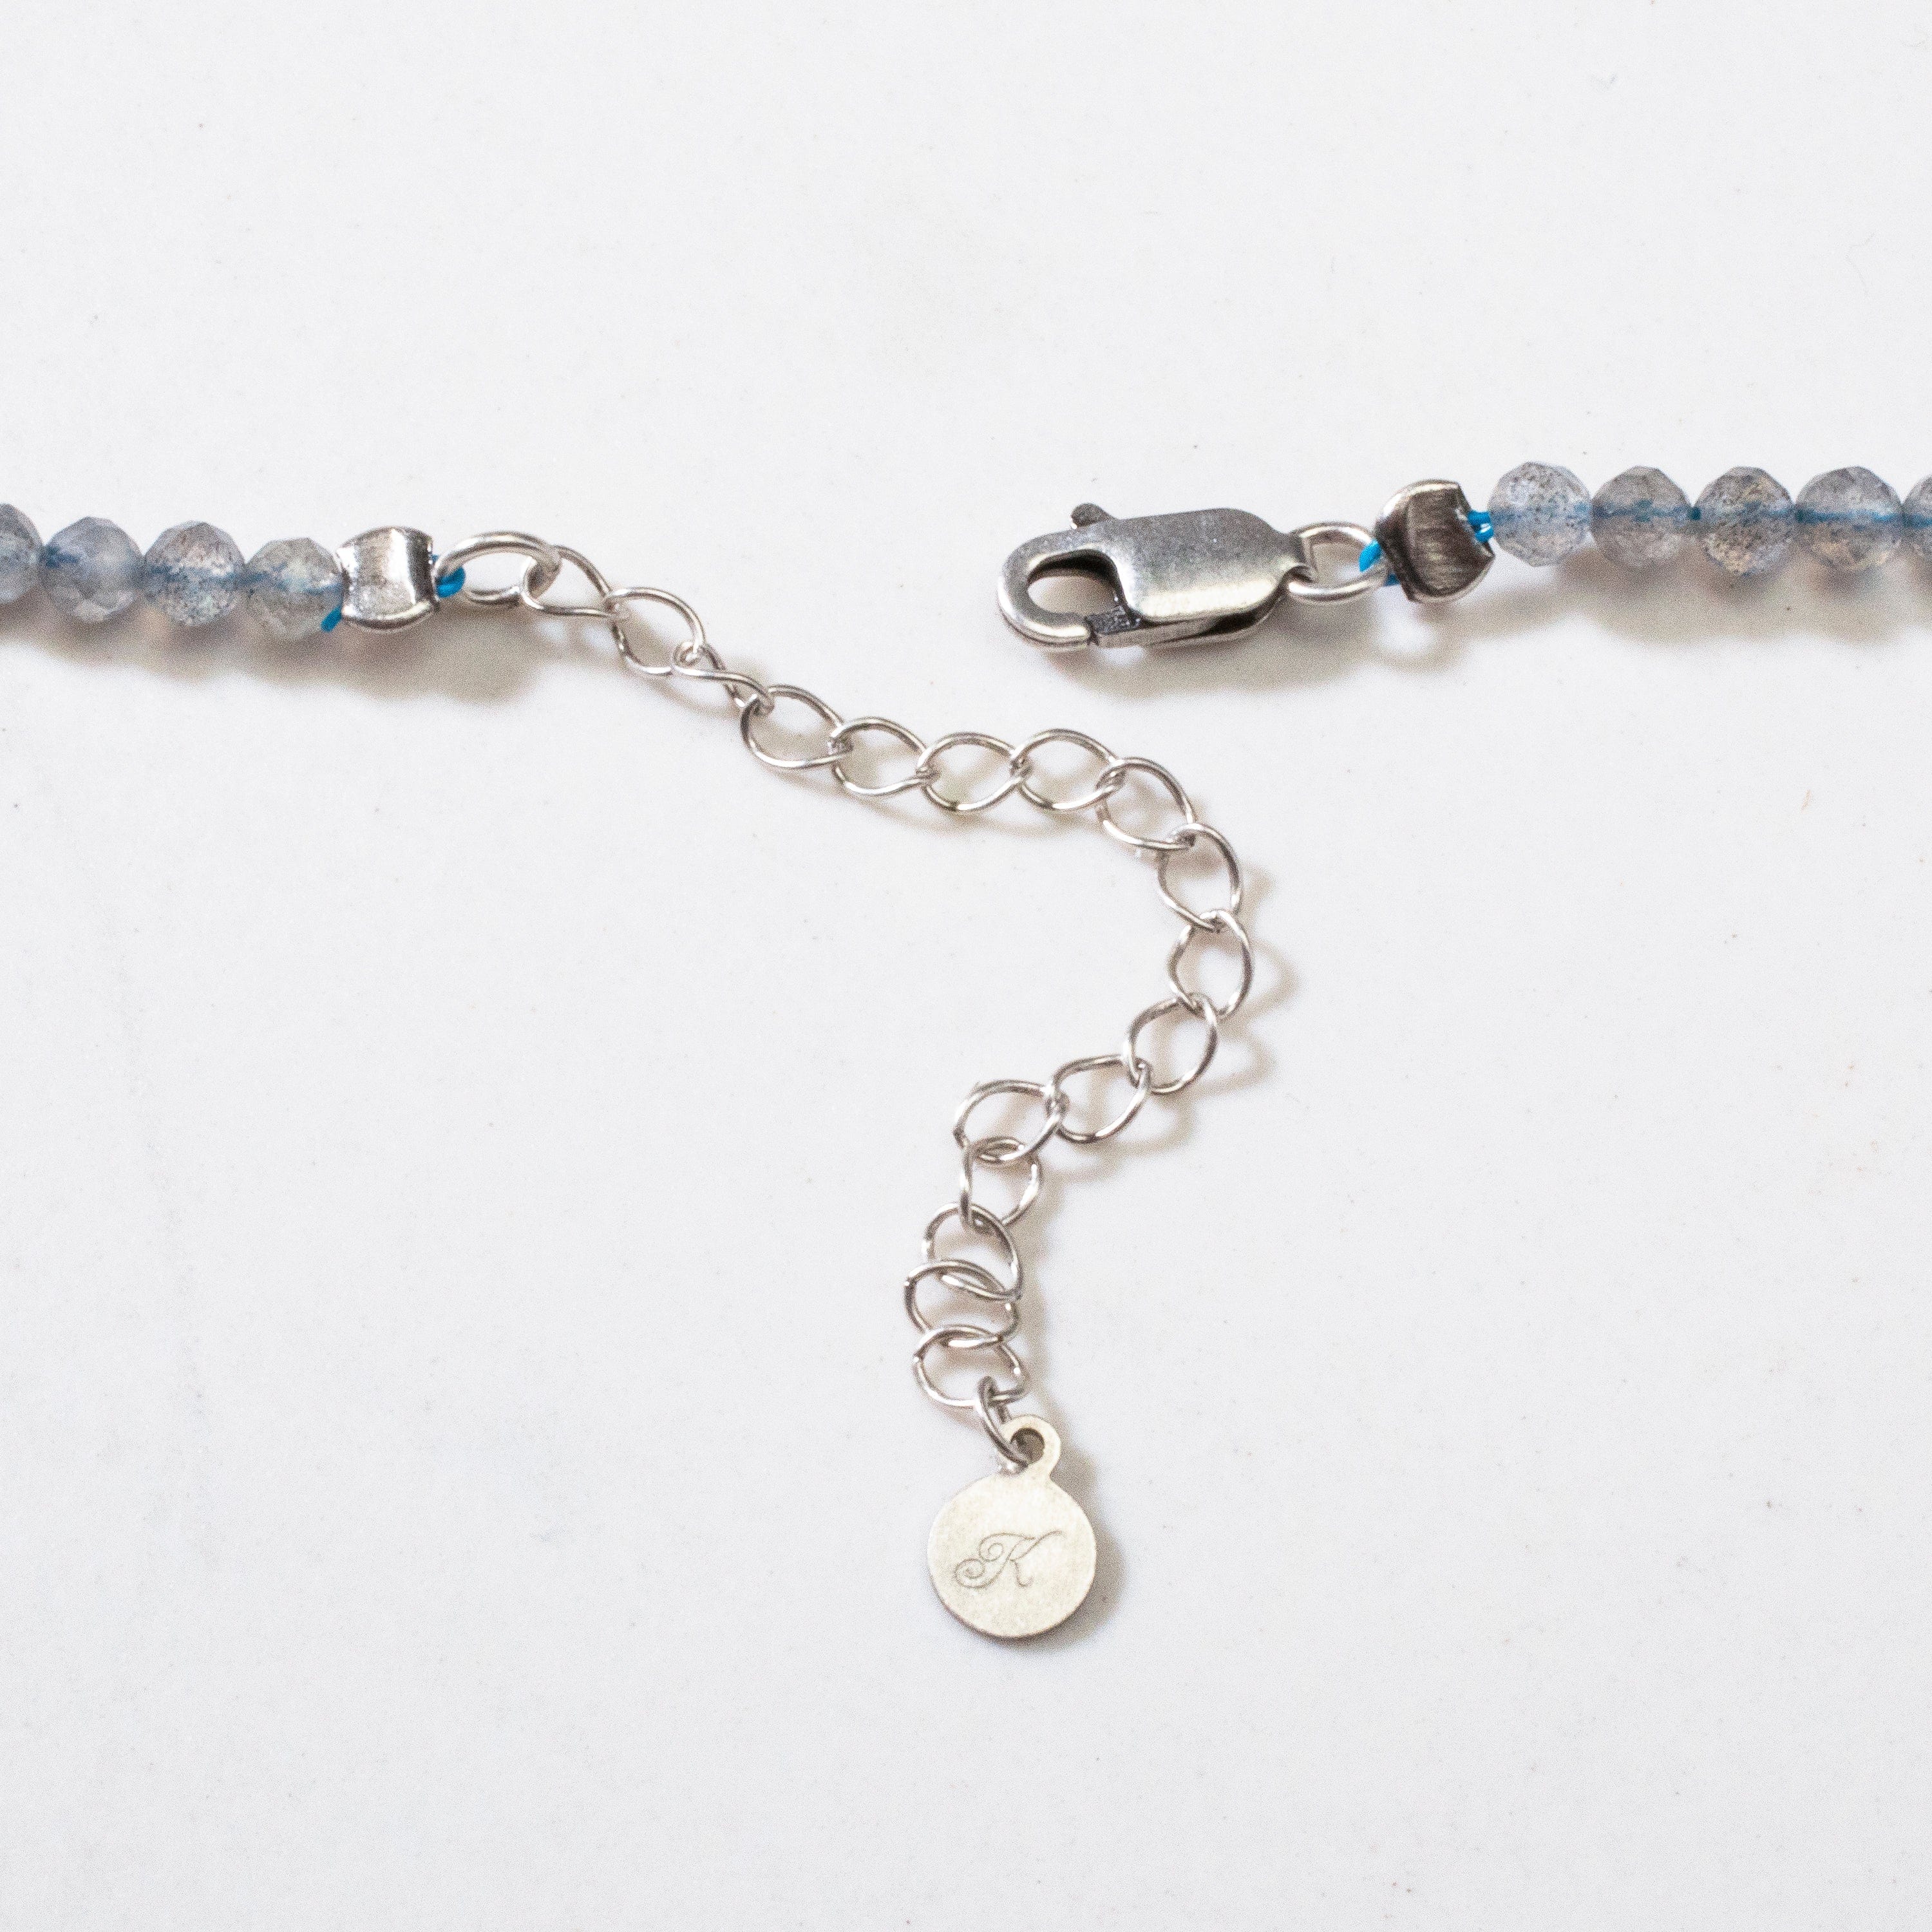 KALIFANO Gemstone Jewelry 3mm Labradorite Faceted 31" Necklace / Multi Wrap Bracelet N3-79S-LB